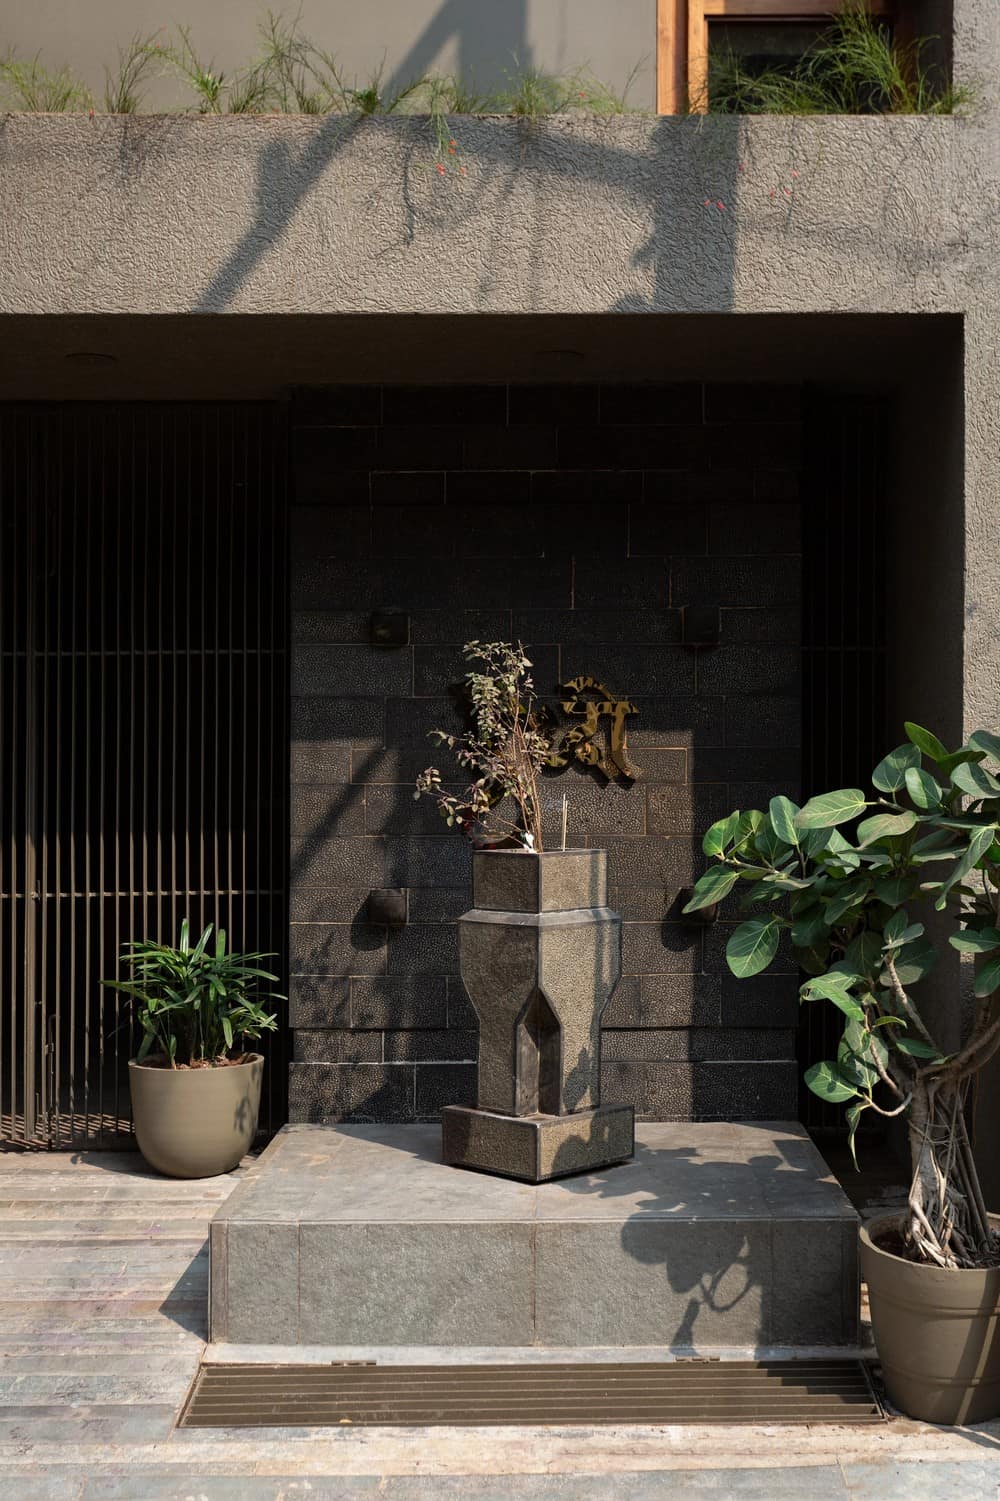 The Brick Box / Dhanesh Gandhi Architects